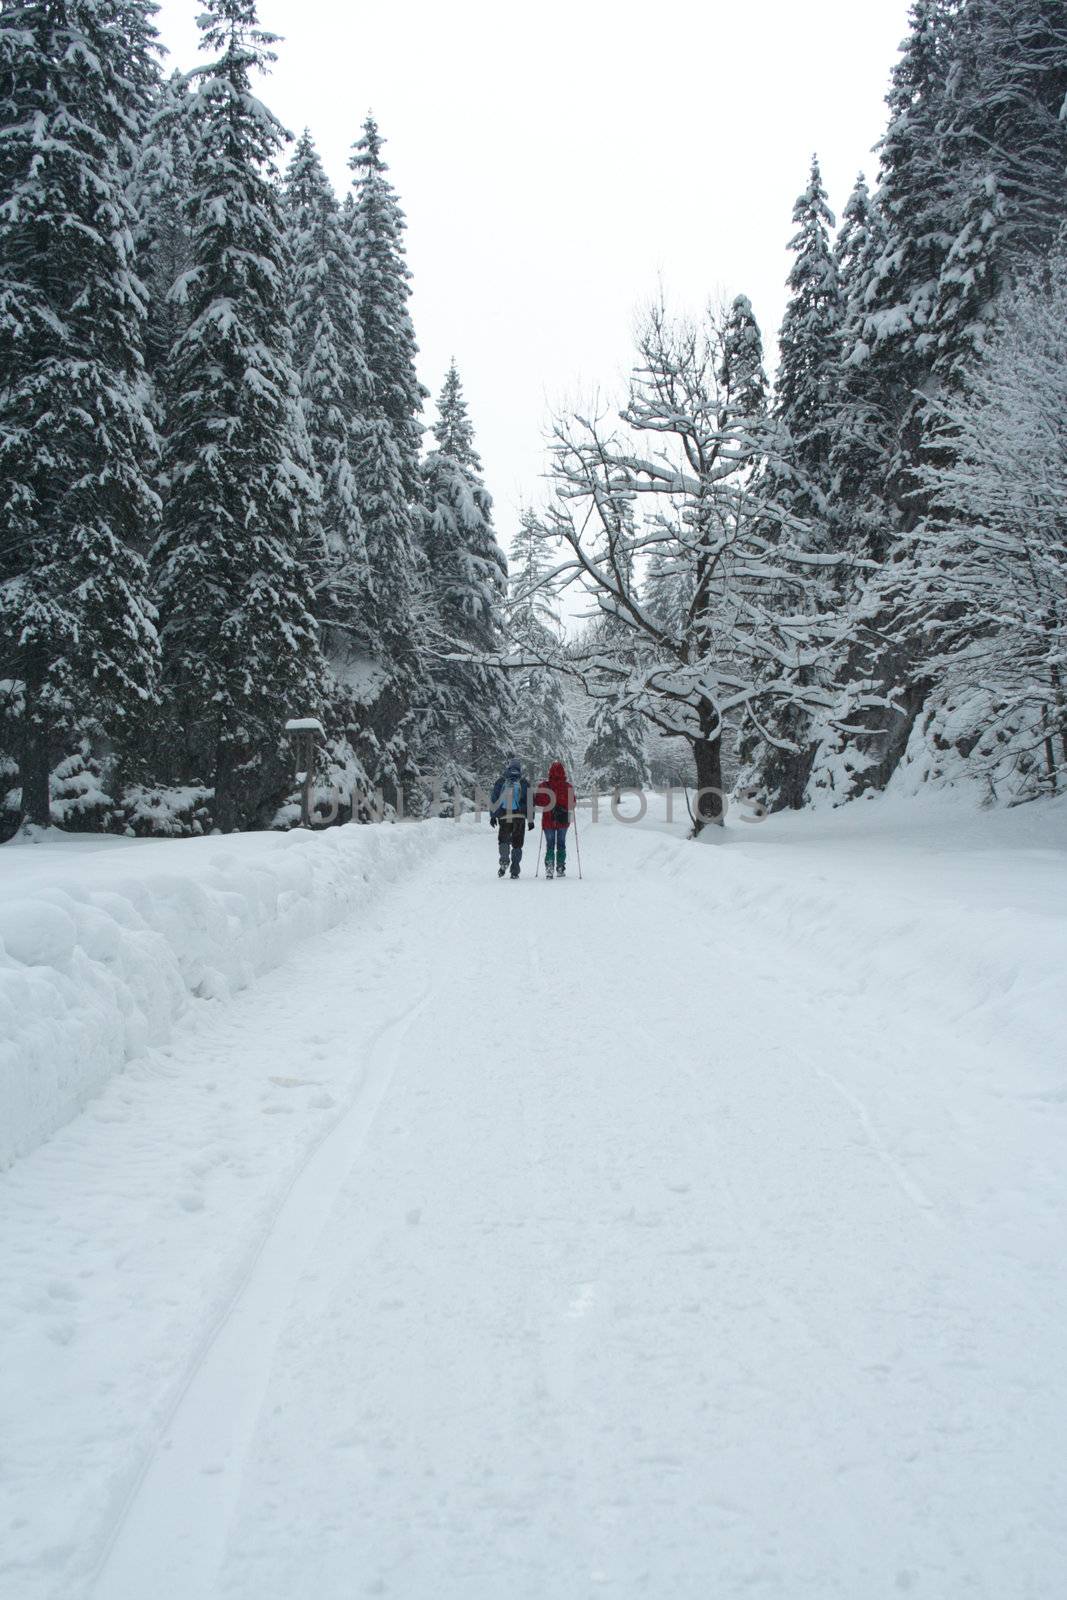 winter path through forest by aguirre_mar